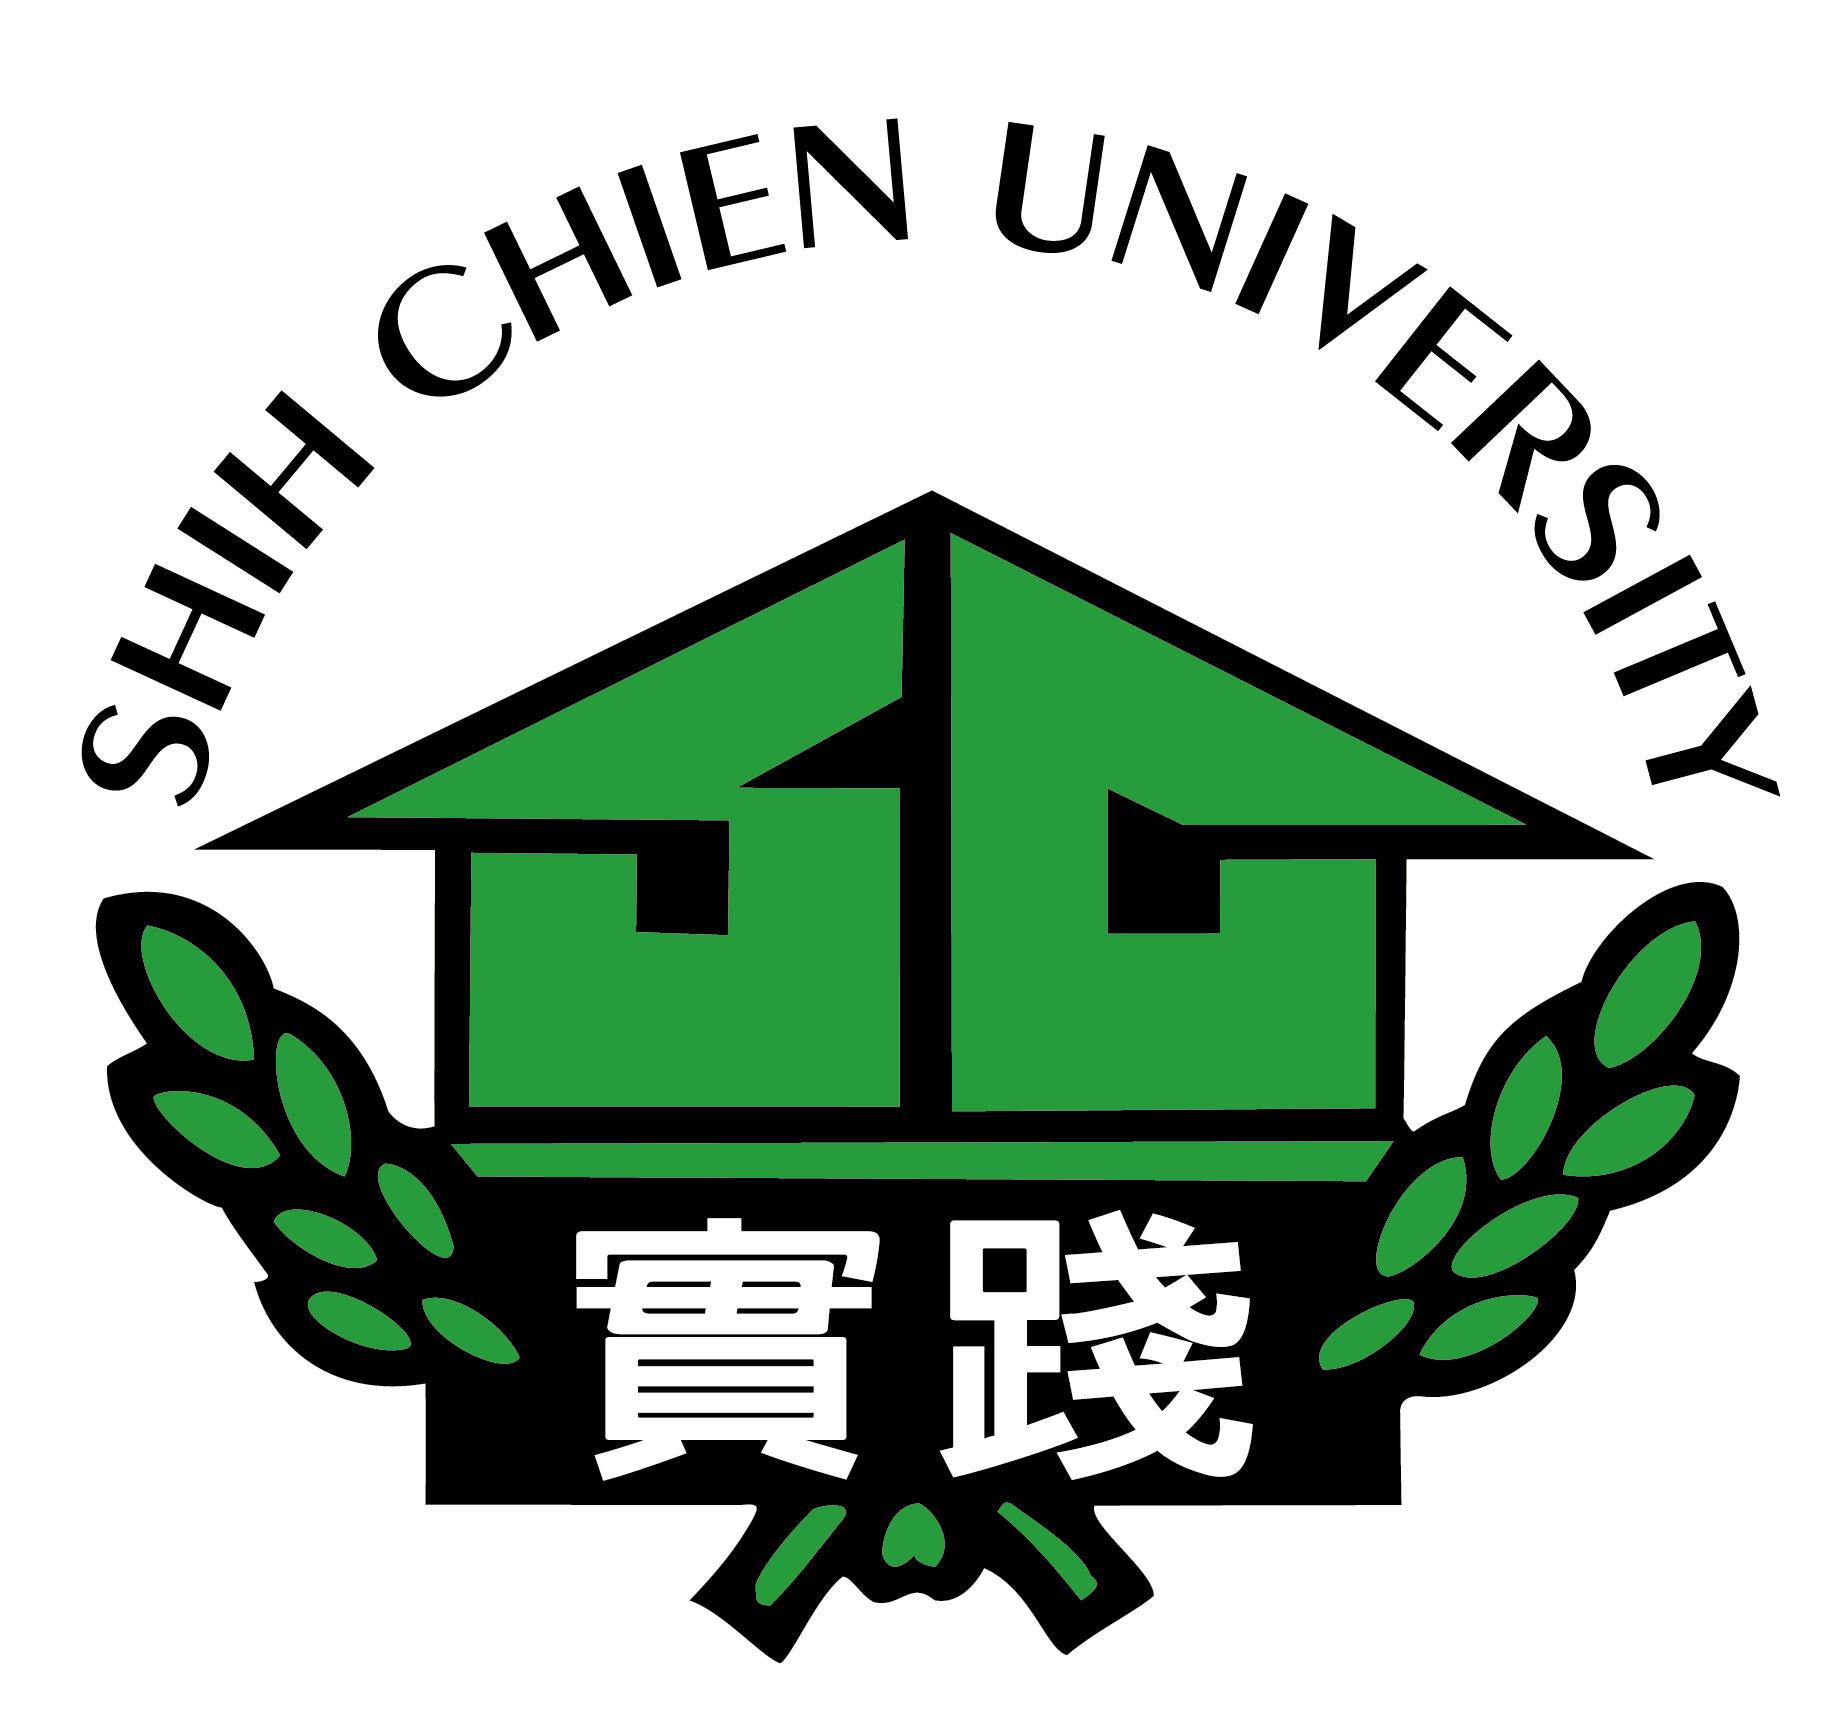 Shih Chien University 的圖片